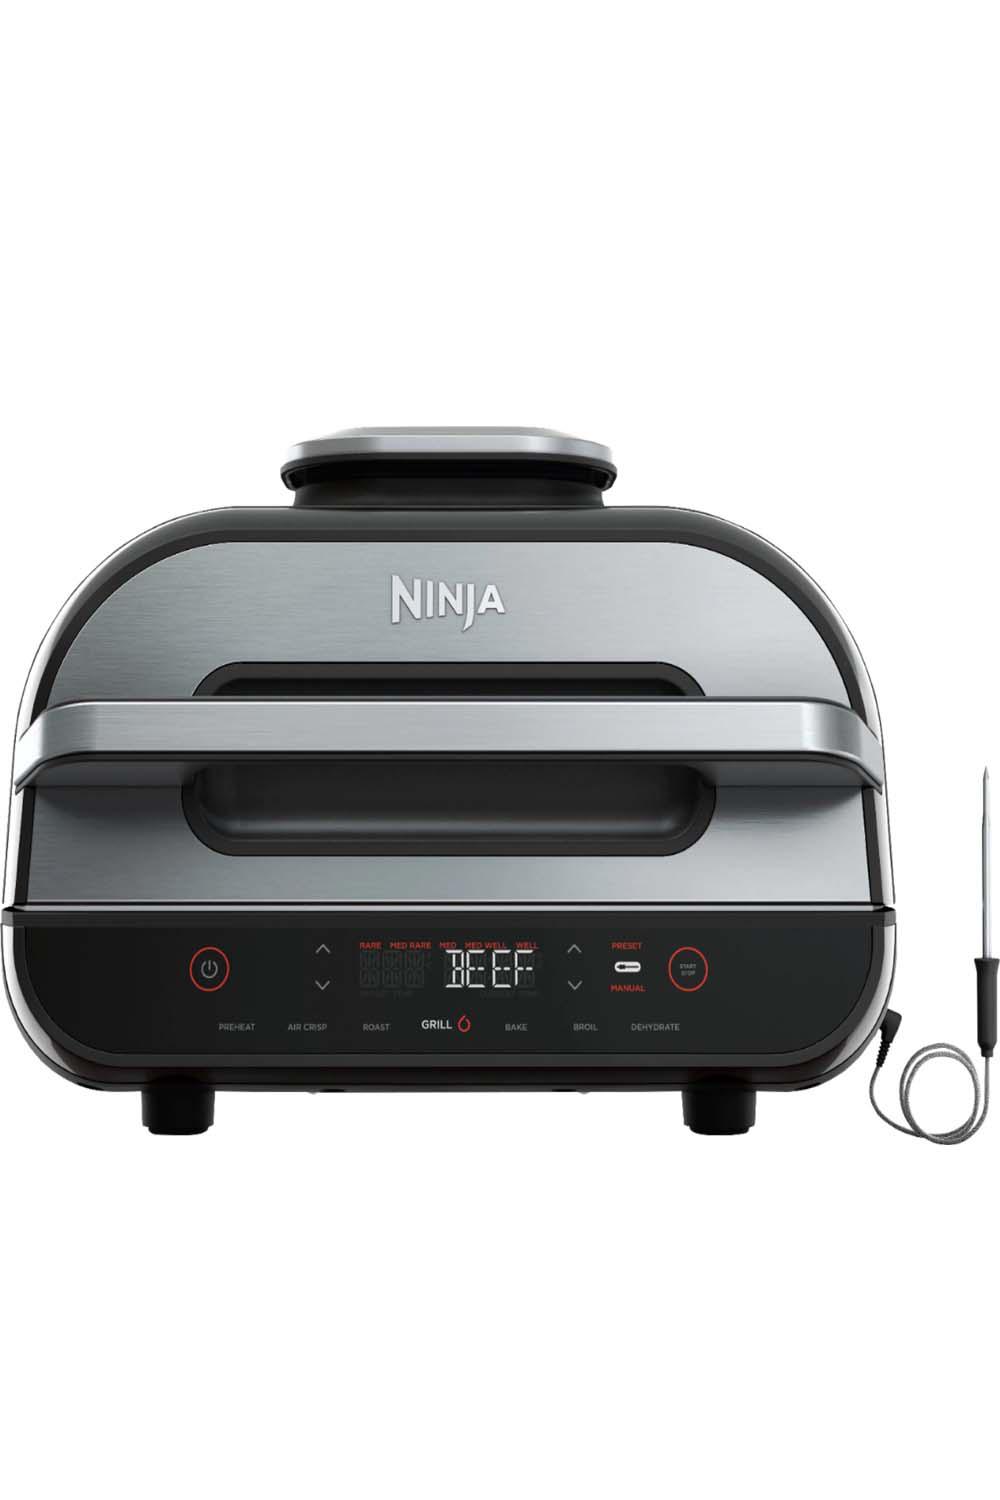 Ninja Foodi 6-in-1 Smart XL Indoor Grill with Air Fryer FG551